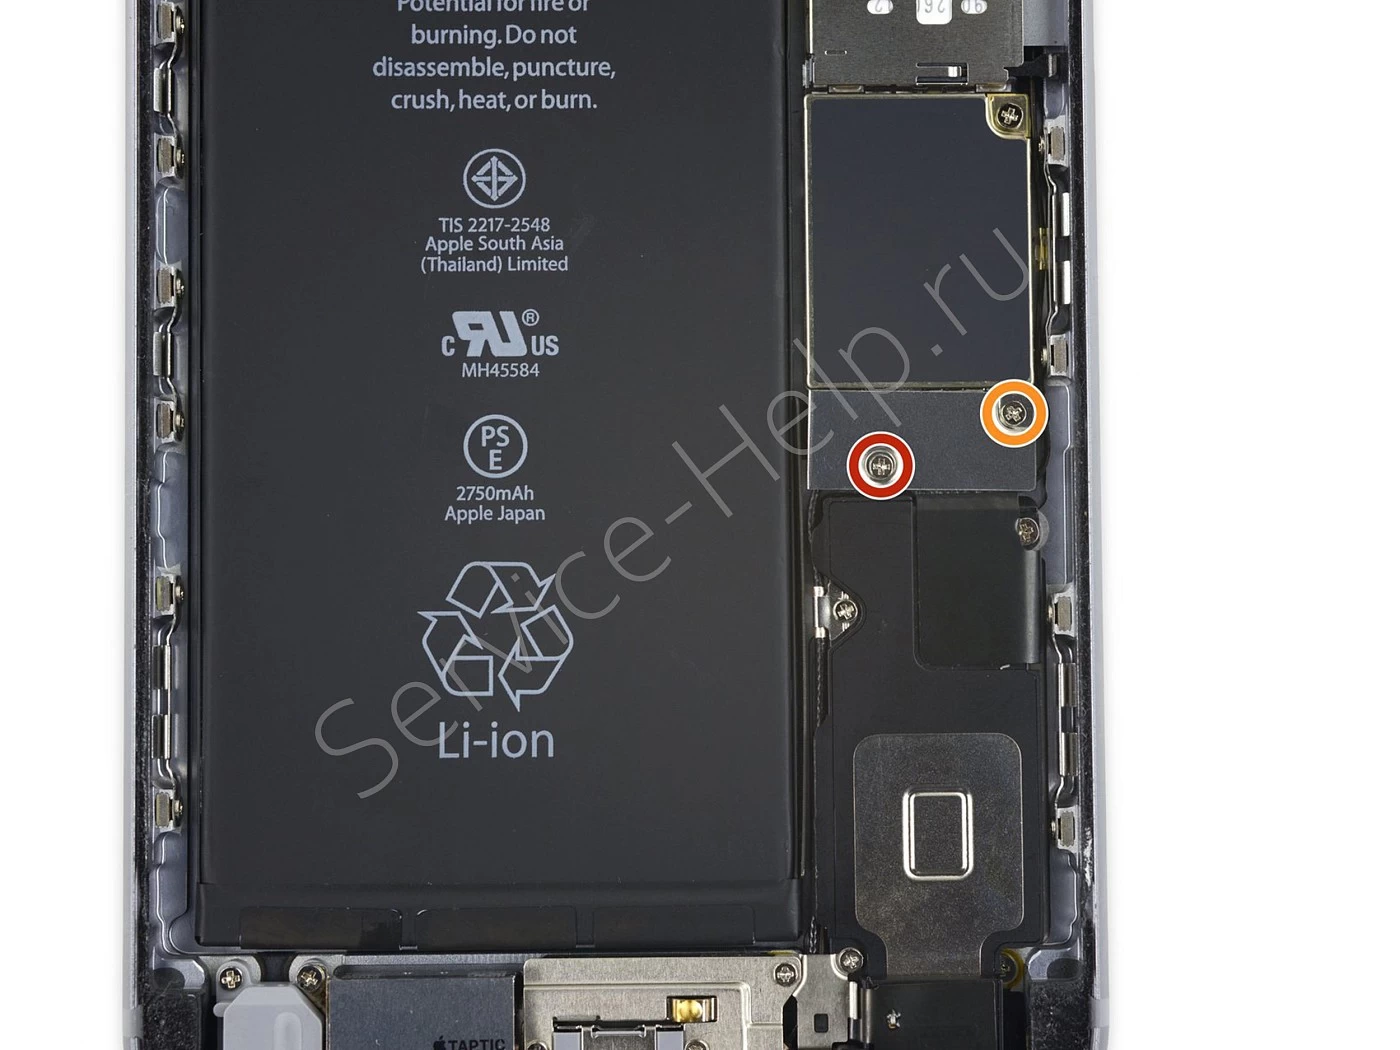 Экран аккумулятор. Bluetooth iphone 6s Plus. Айфон 6 плюс экран. Динамик Apple iphone 6s Plus. Tis 2217-2548 Apple South Asia.